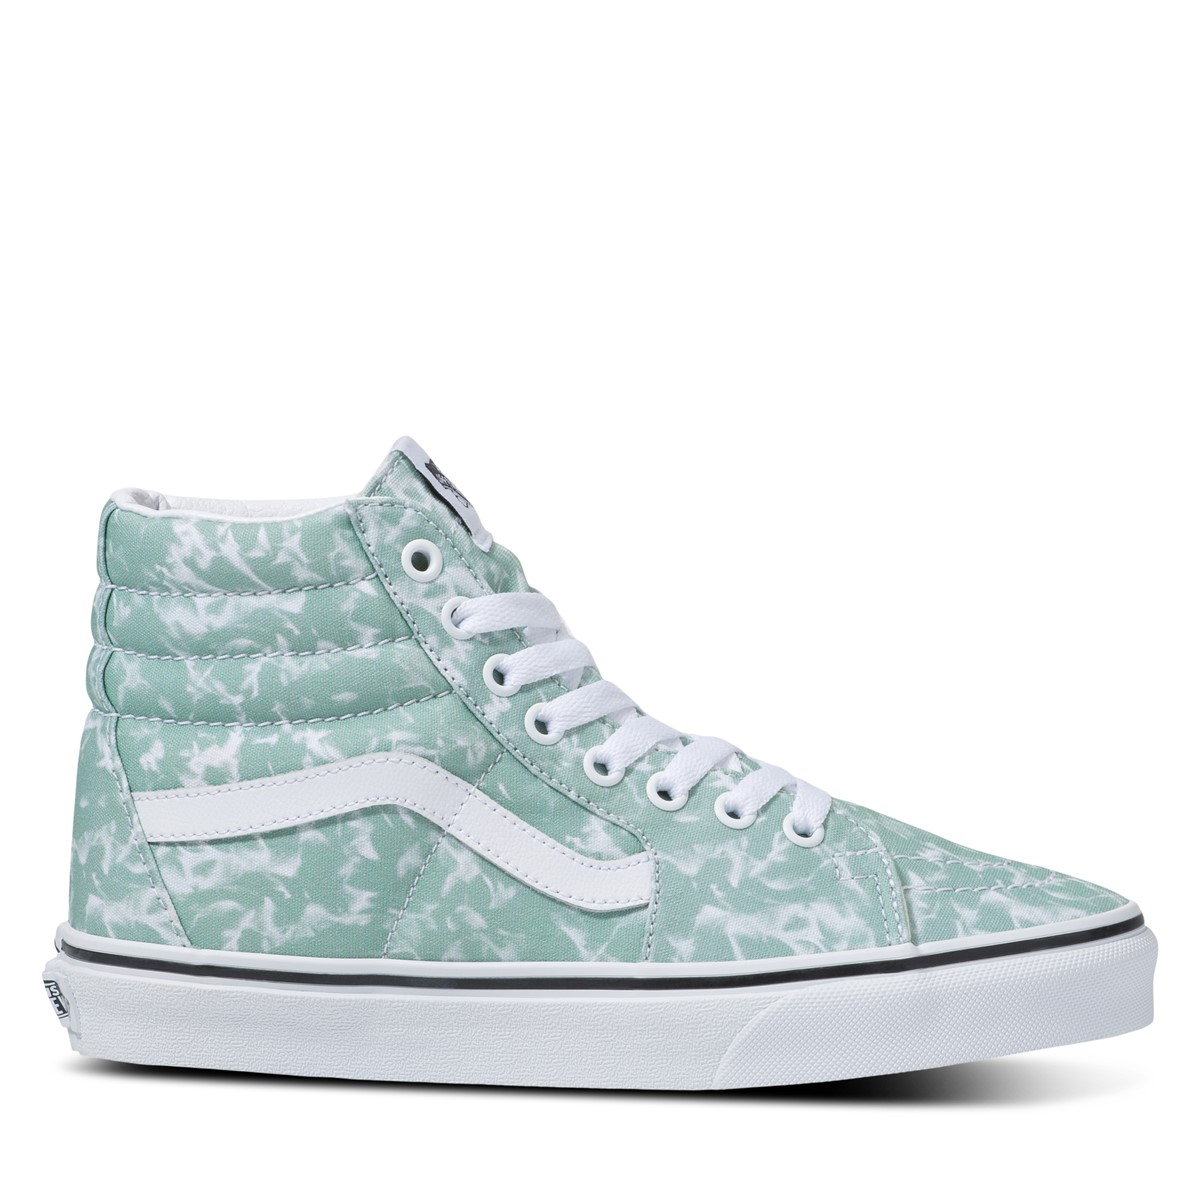 SK8-Hi Sneakers in Green/White